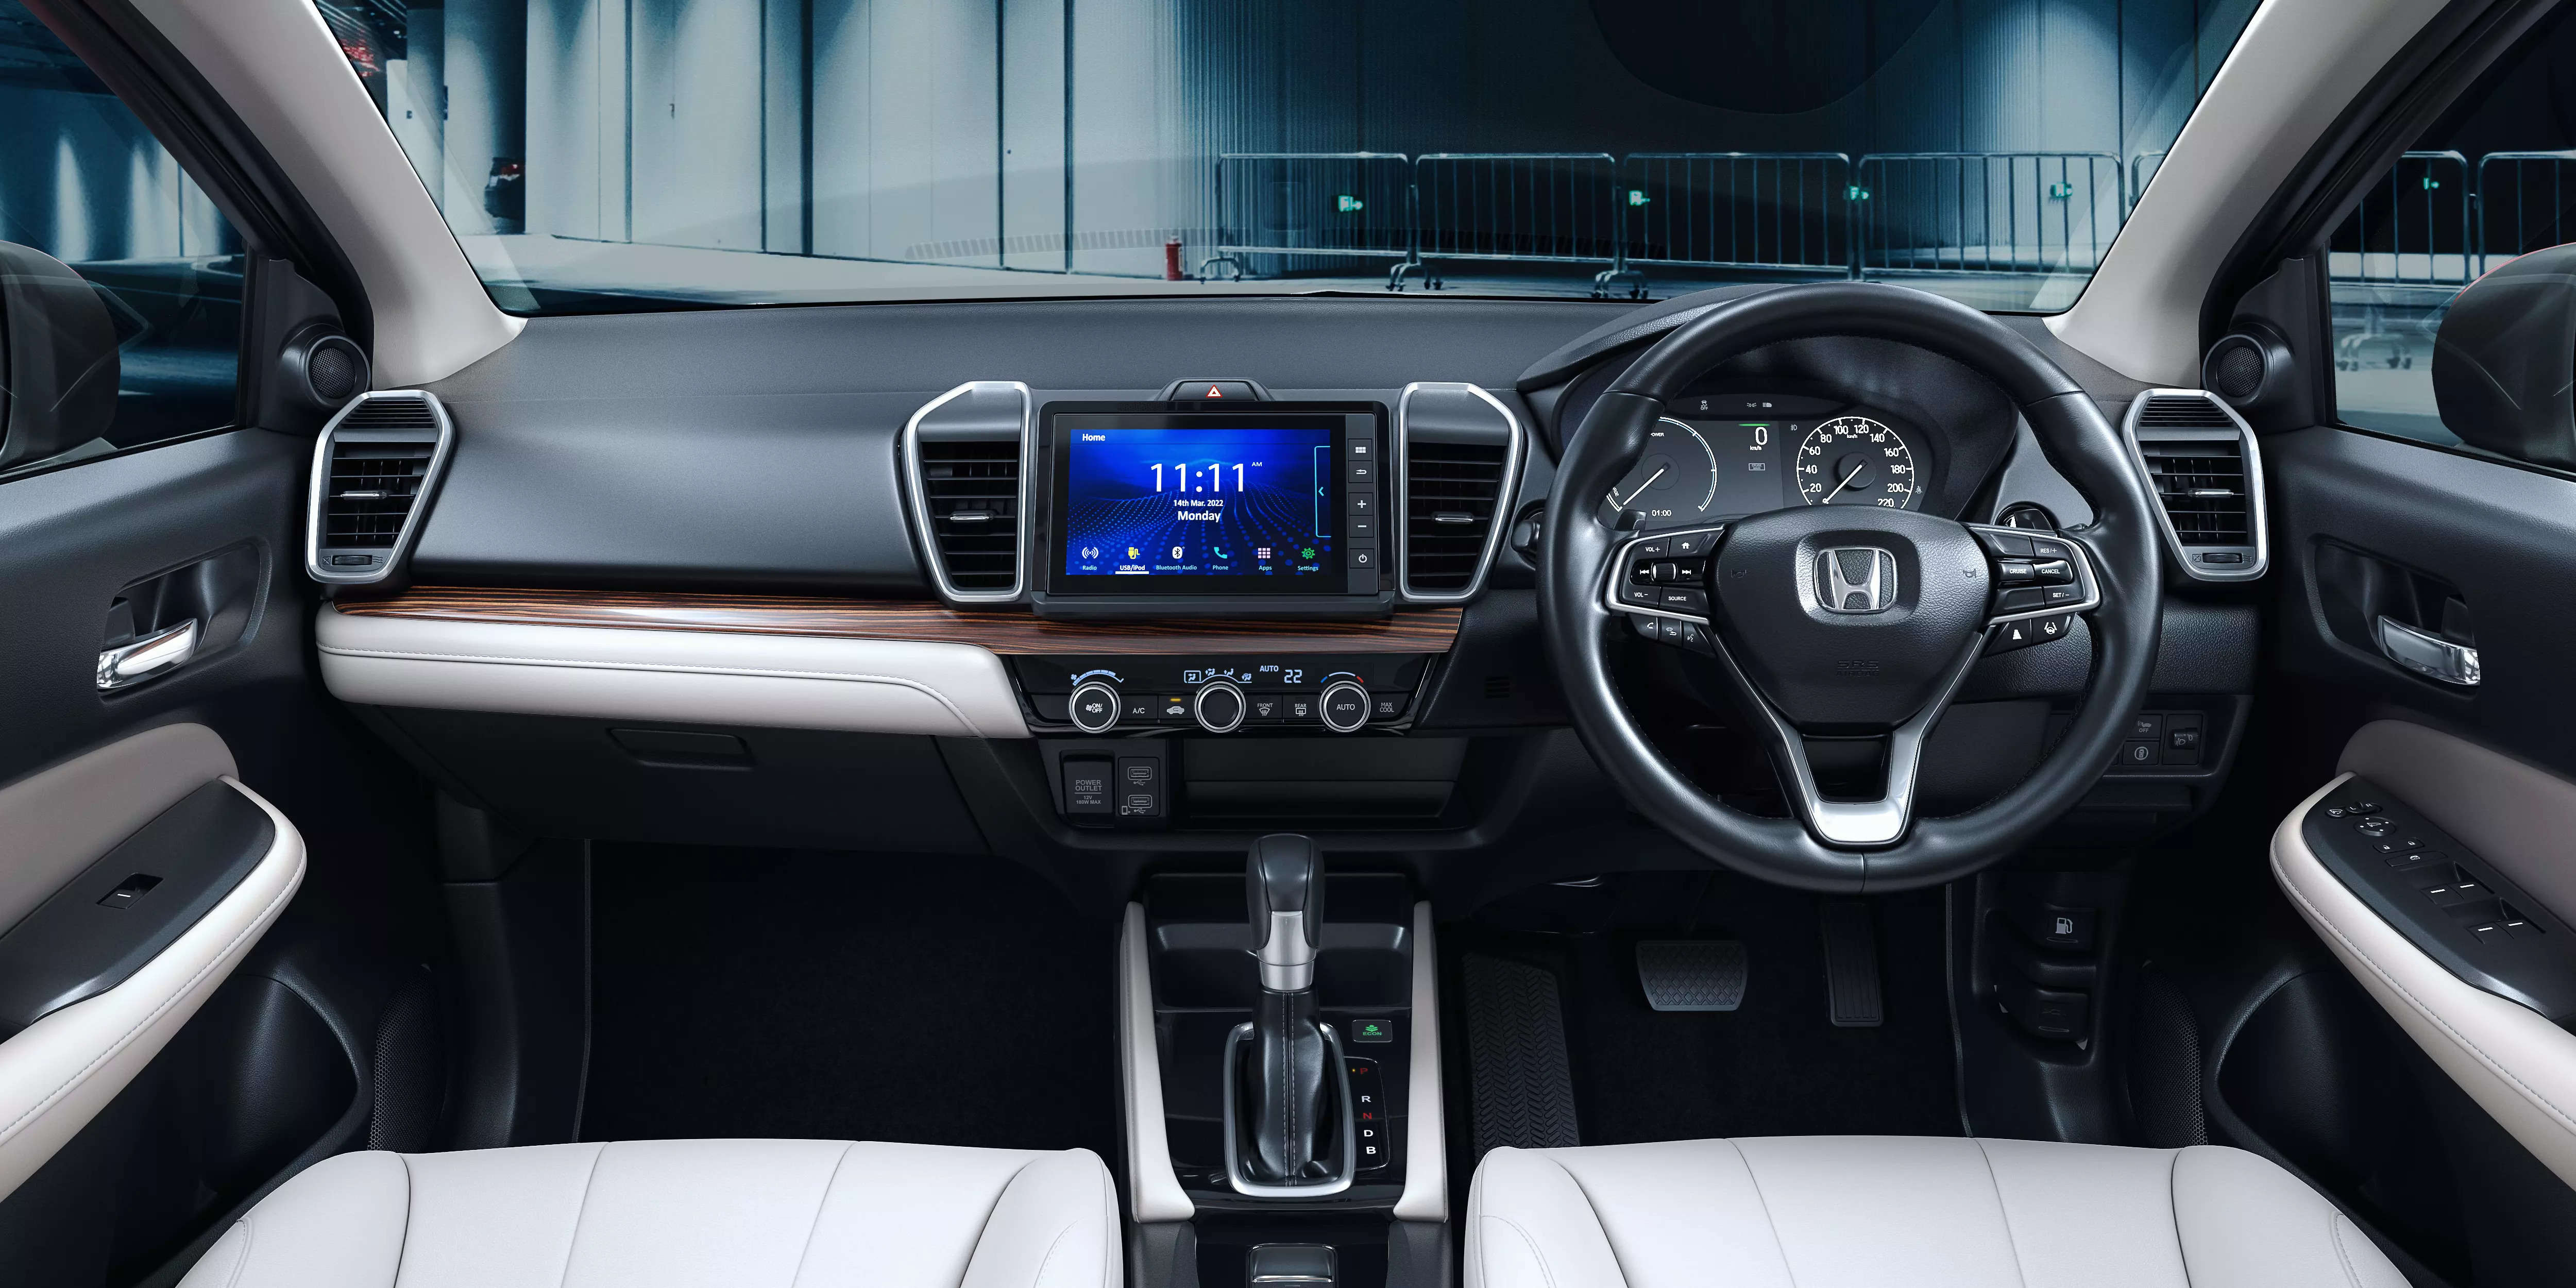 Honda City hybrid review : Peerless but not flawless